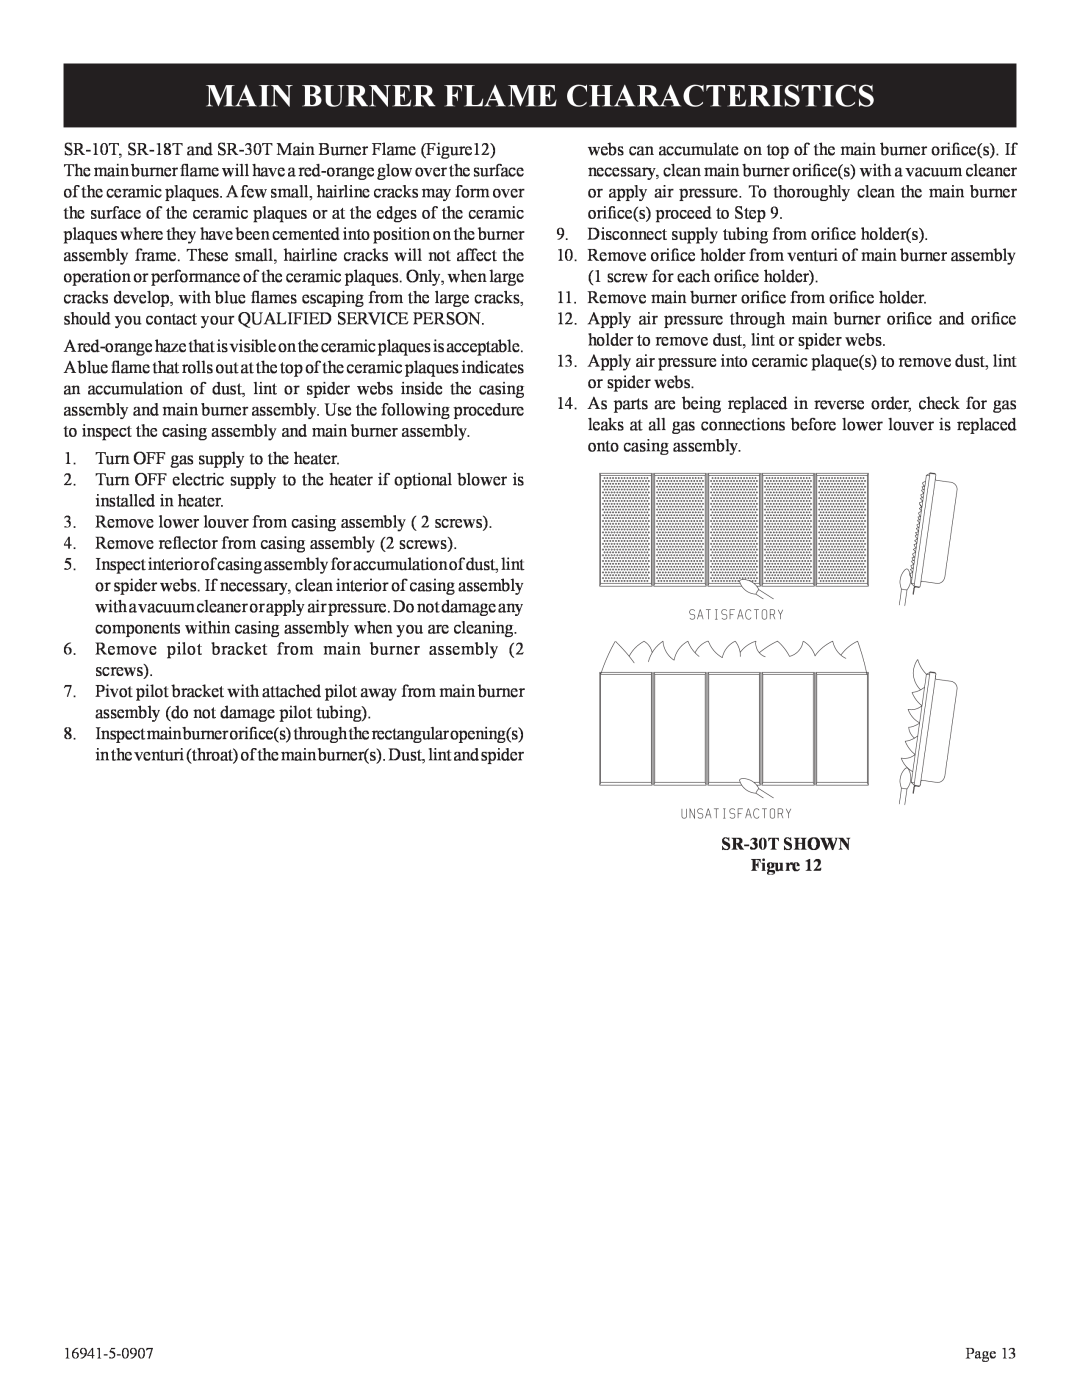 Empire Comfort Systems SR-10T-3 installation instructions Main Burner Flame Characteristics, SR-30TSHOWN Figure 